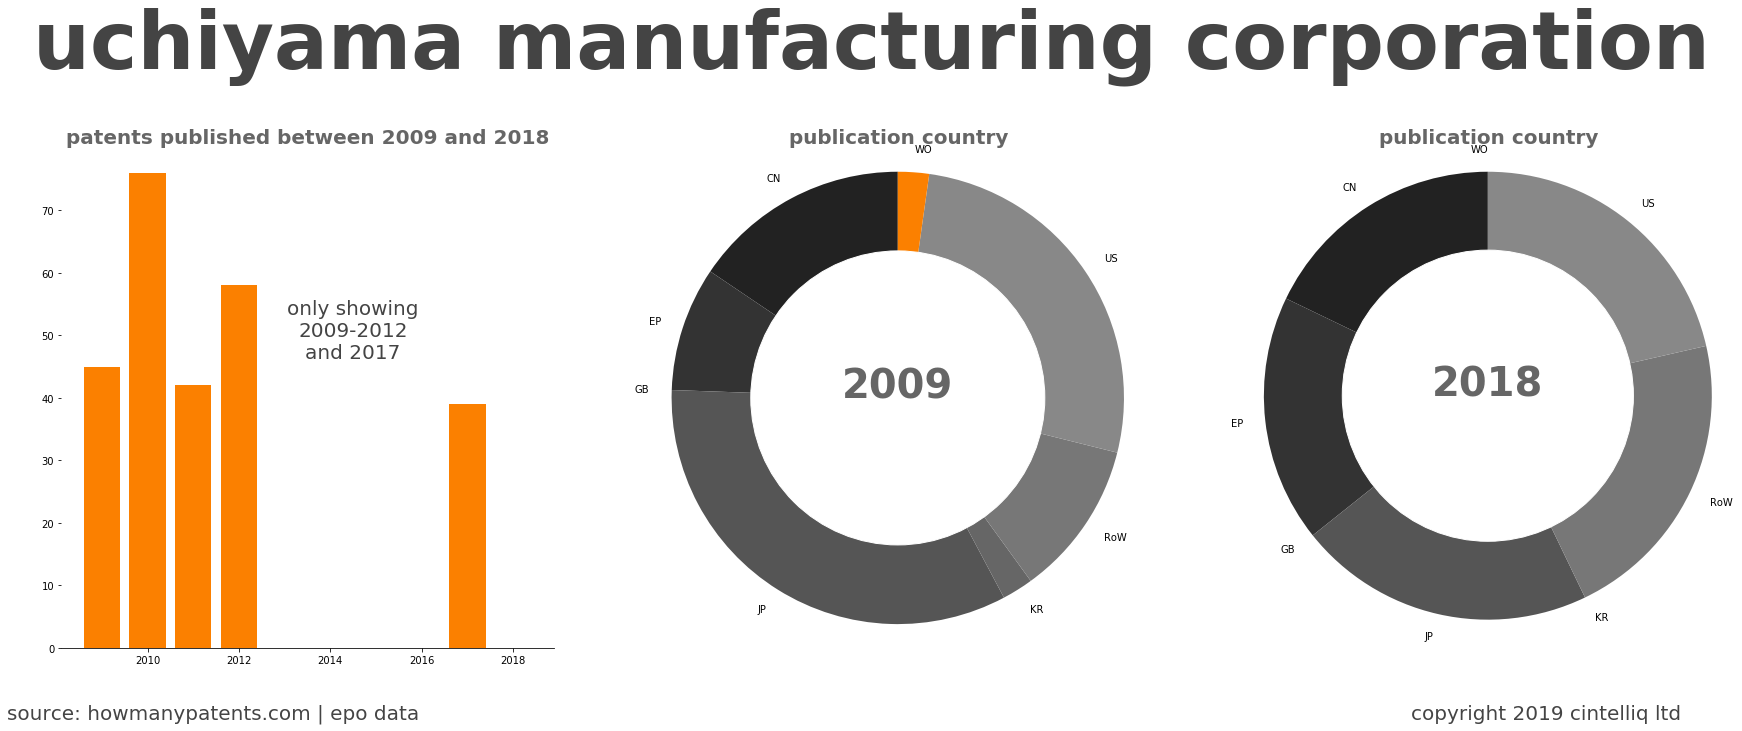 summary of patents for Uchiyama Manufacturing Corporation